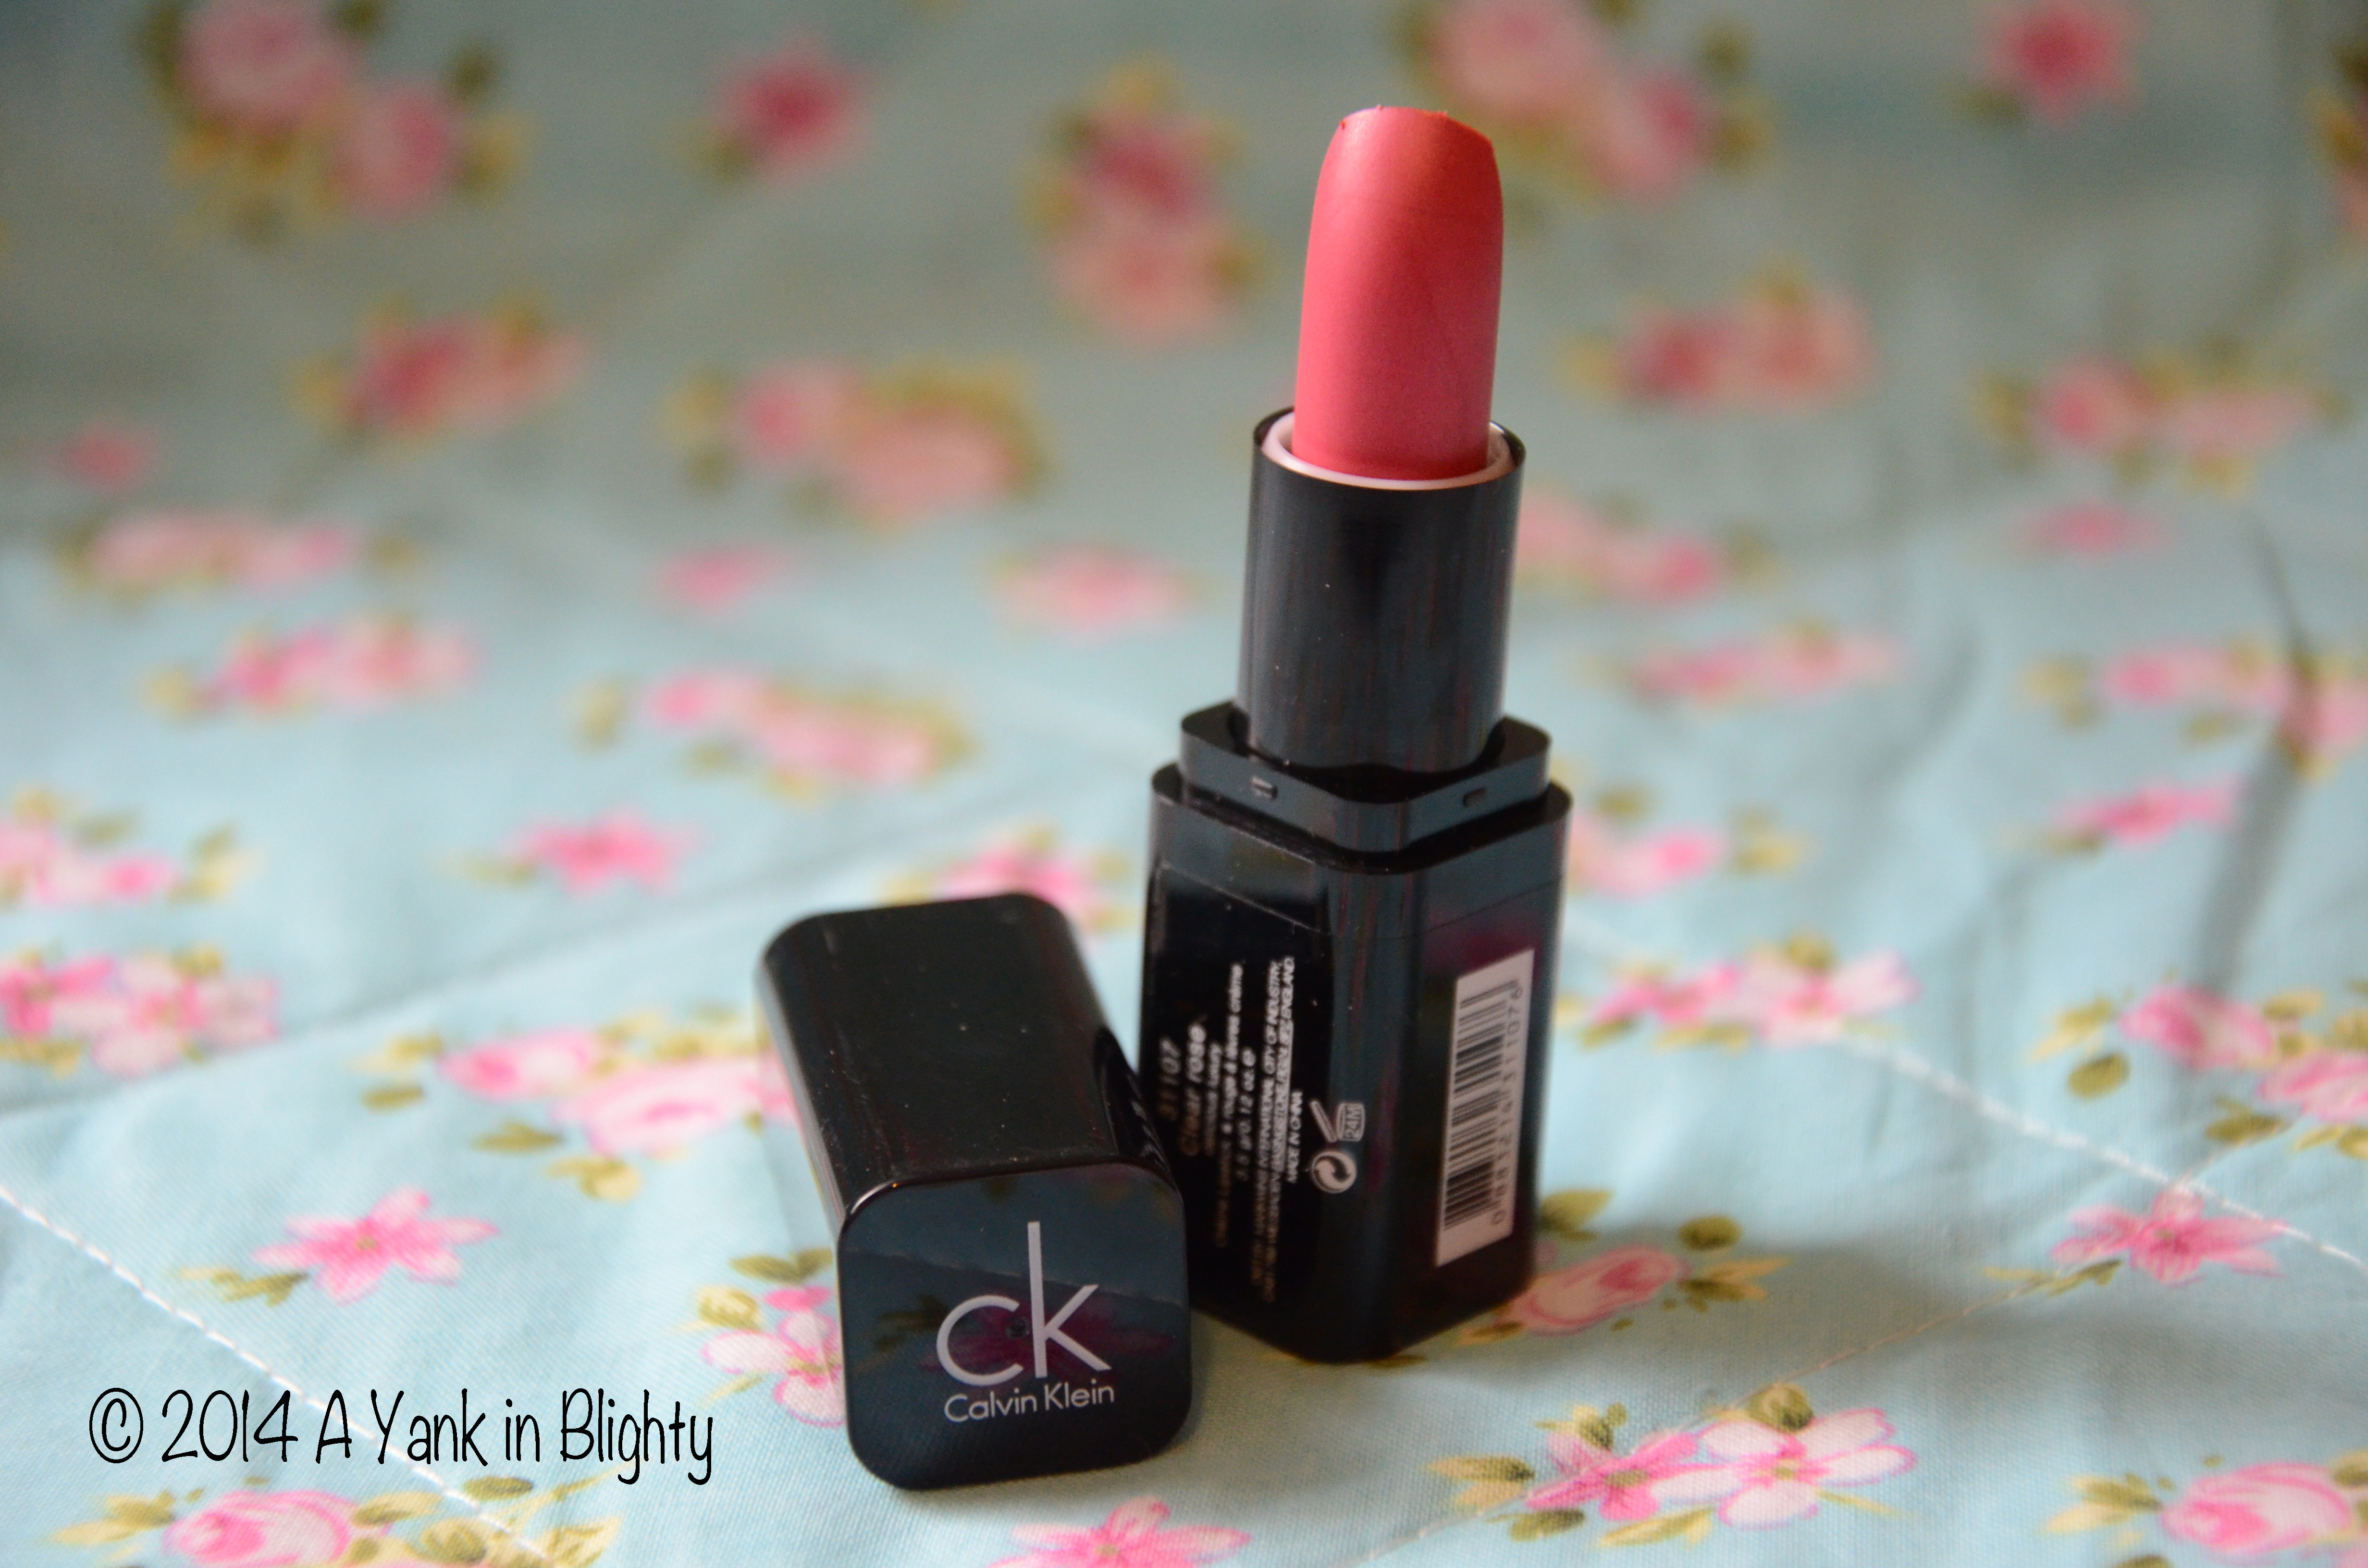 Calvin Klein Lipstick in Clear Rose